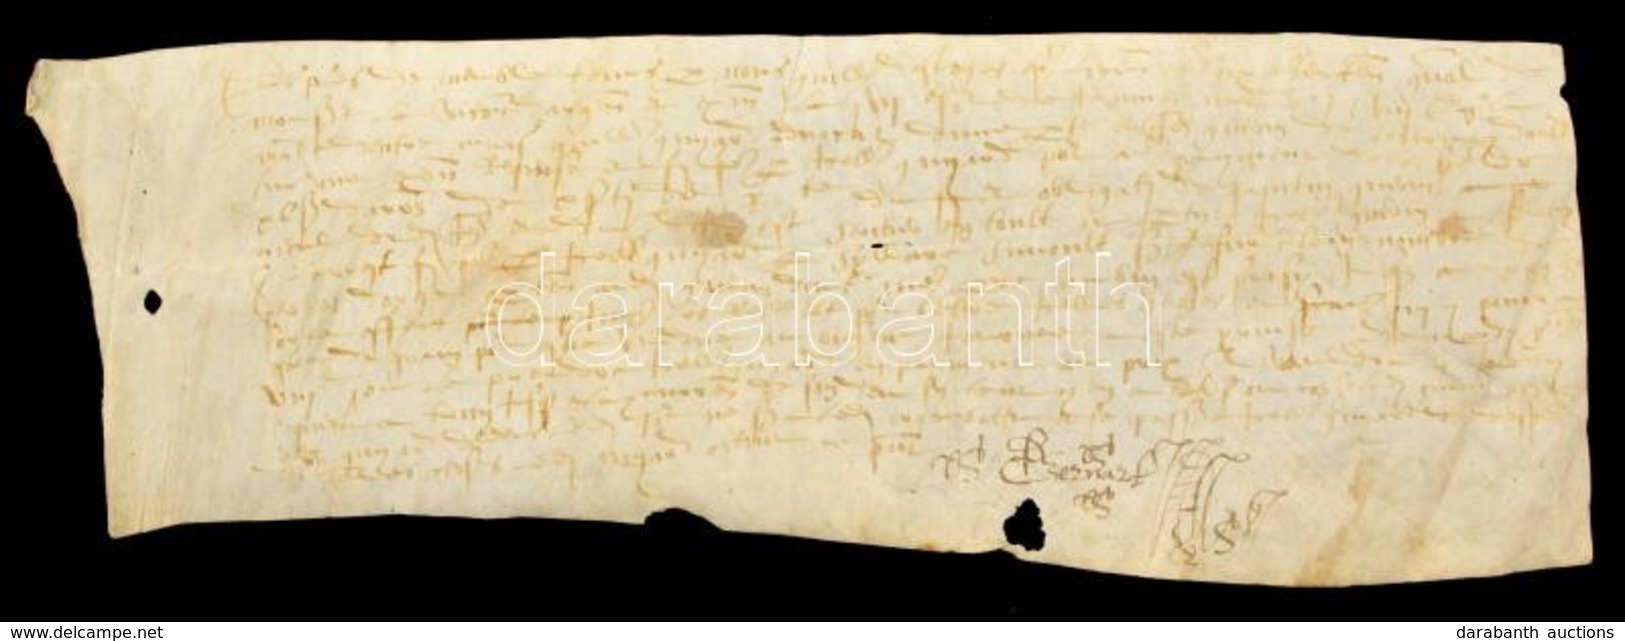 Cca 1600-1800 Francia Nyelvű Irat, Pergamen, Kissé Foltos /
Cca 1600-1800 Document Written In French, On Parchment, With - Zonder Classificatie